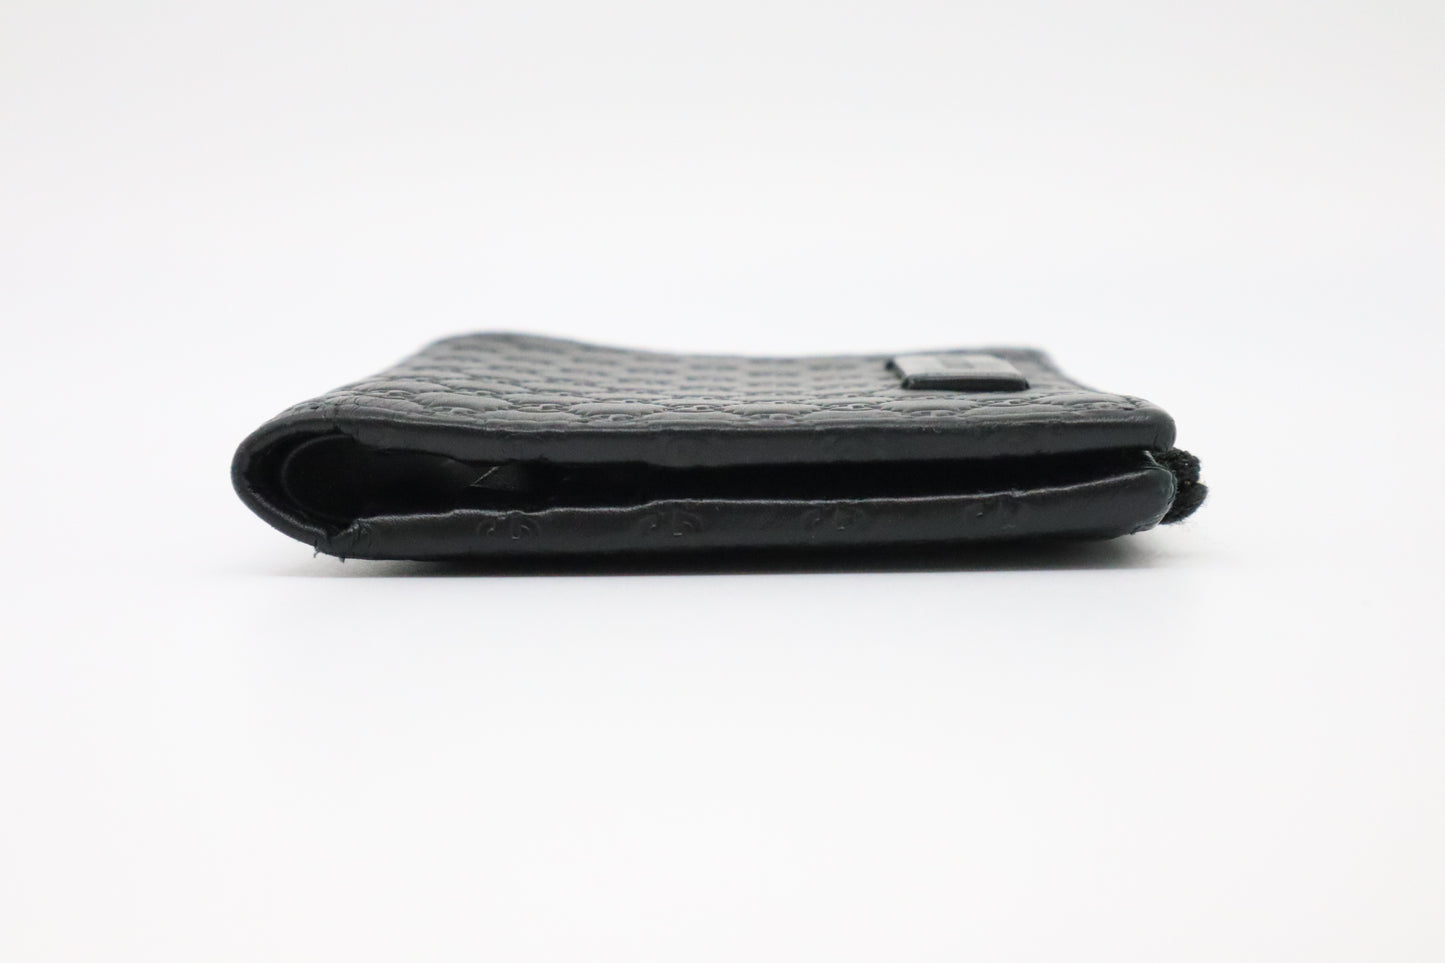 Gucci Compact Wallet in Black Micro Guccissima Leather